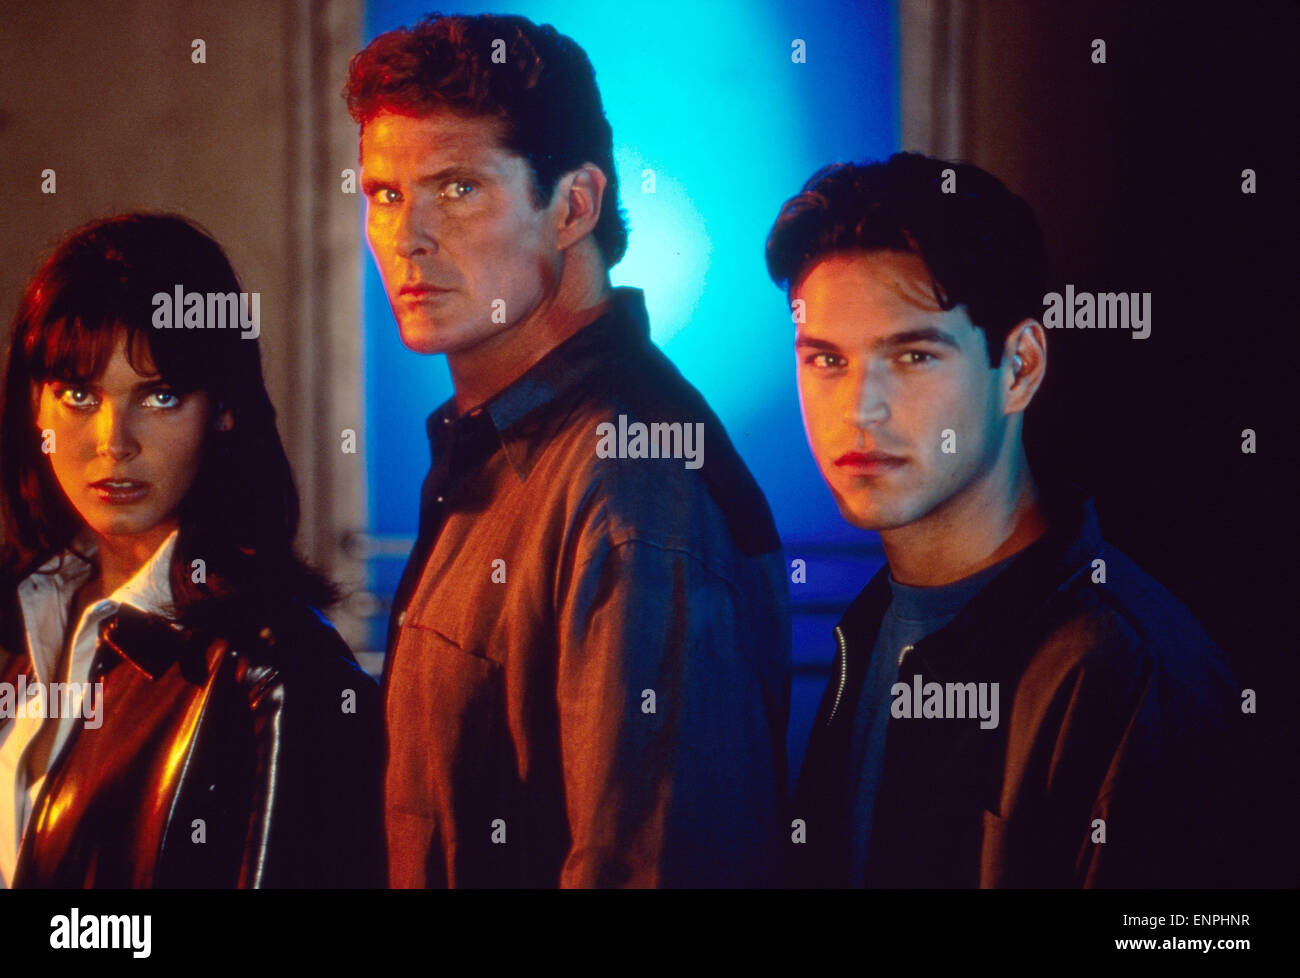 Baywatch Nights, Fernsehserie, USA 1995 - 1997, Darsteller: Angie Harmon, David Hasselhoff, Eddie Cibrian Stock Photo